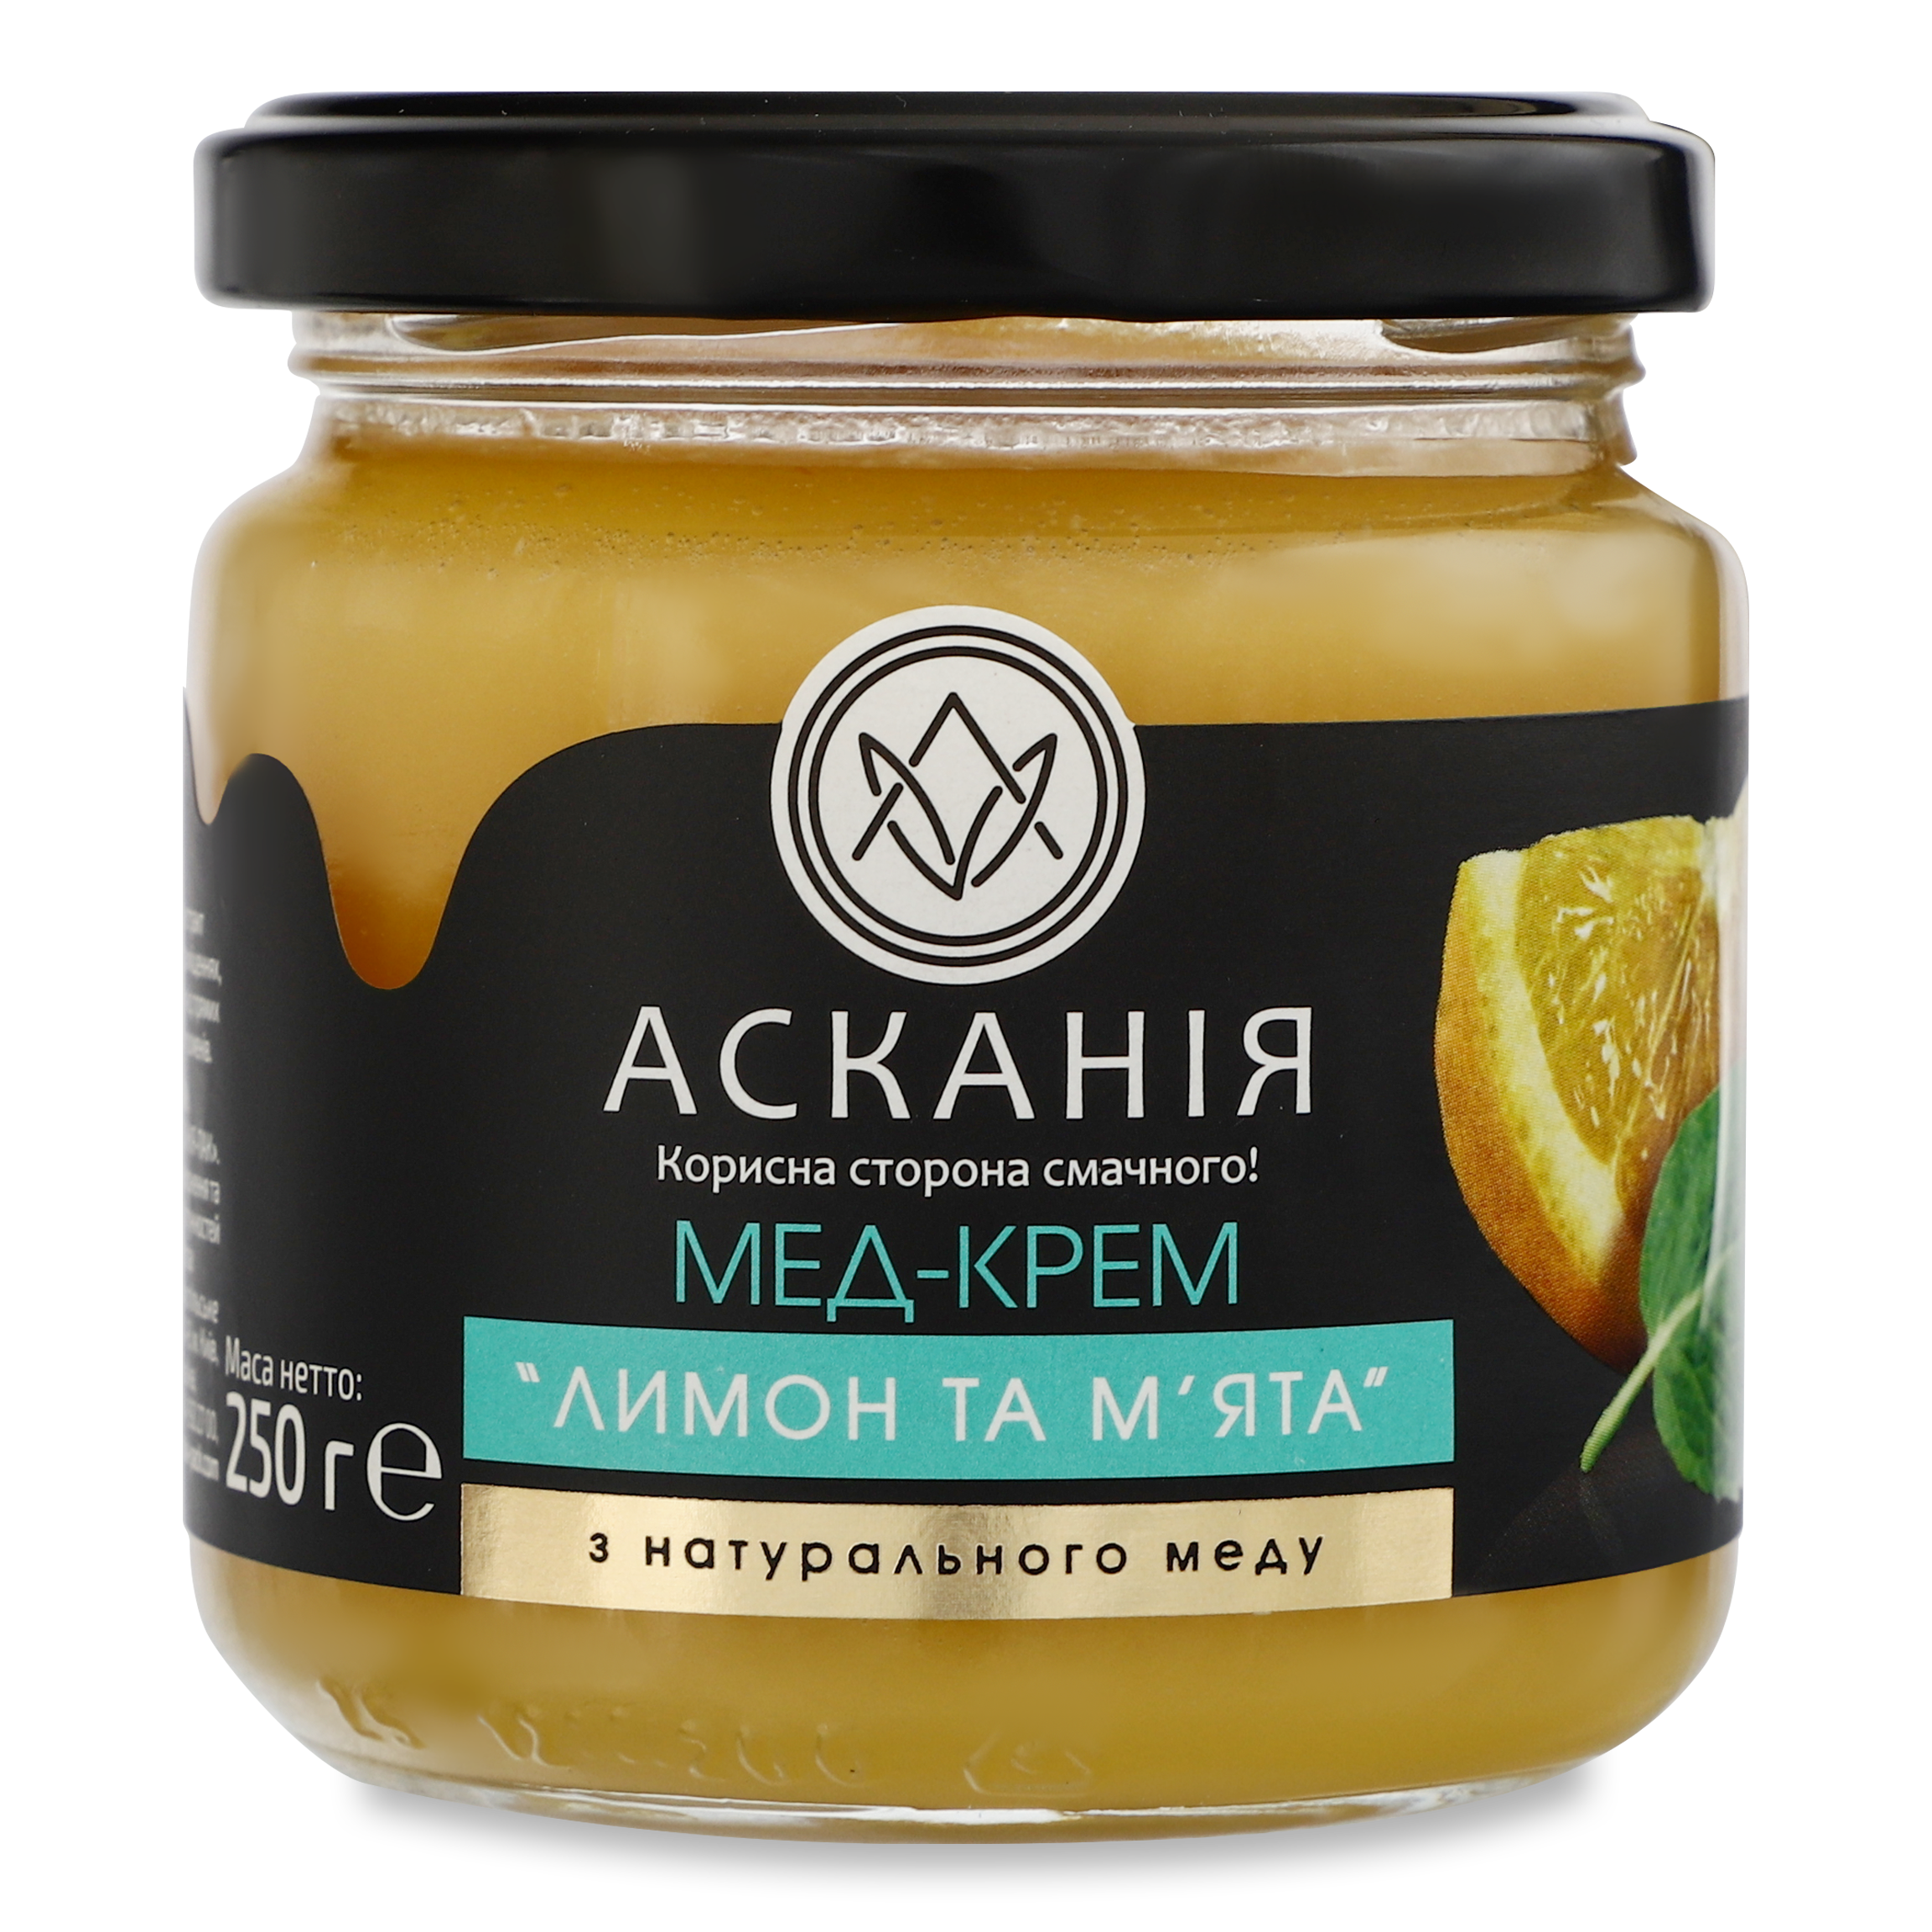 Askania Lemon and Mint Cream-Honey 250g